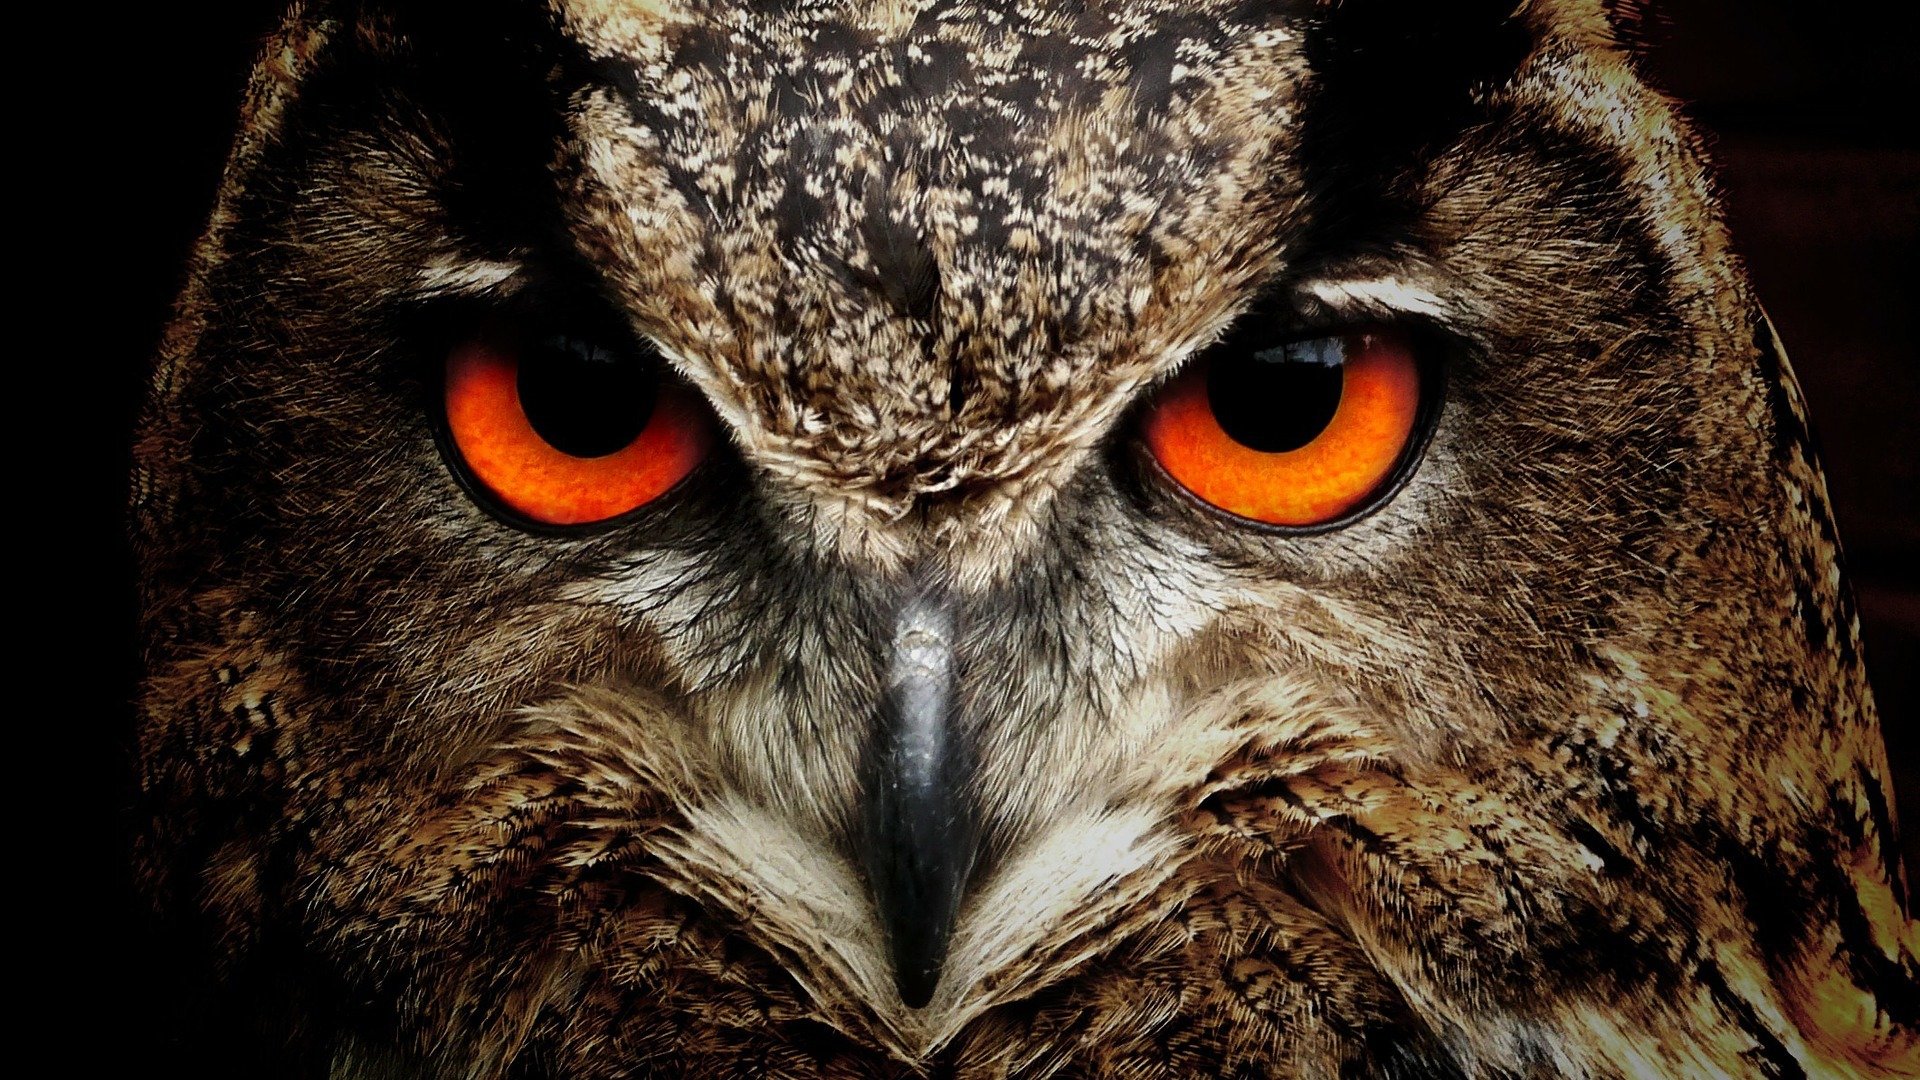 An owl with deep orange eyes